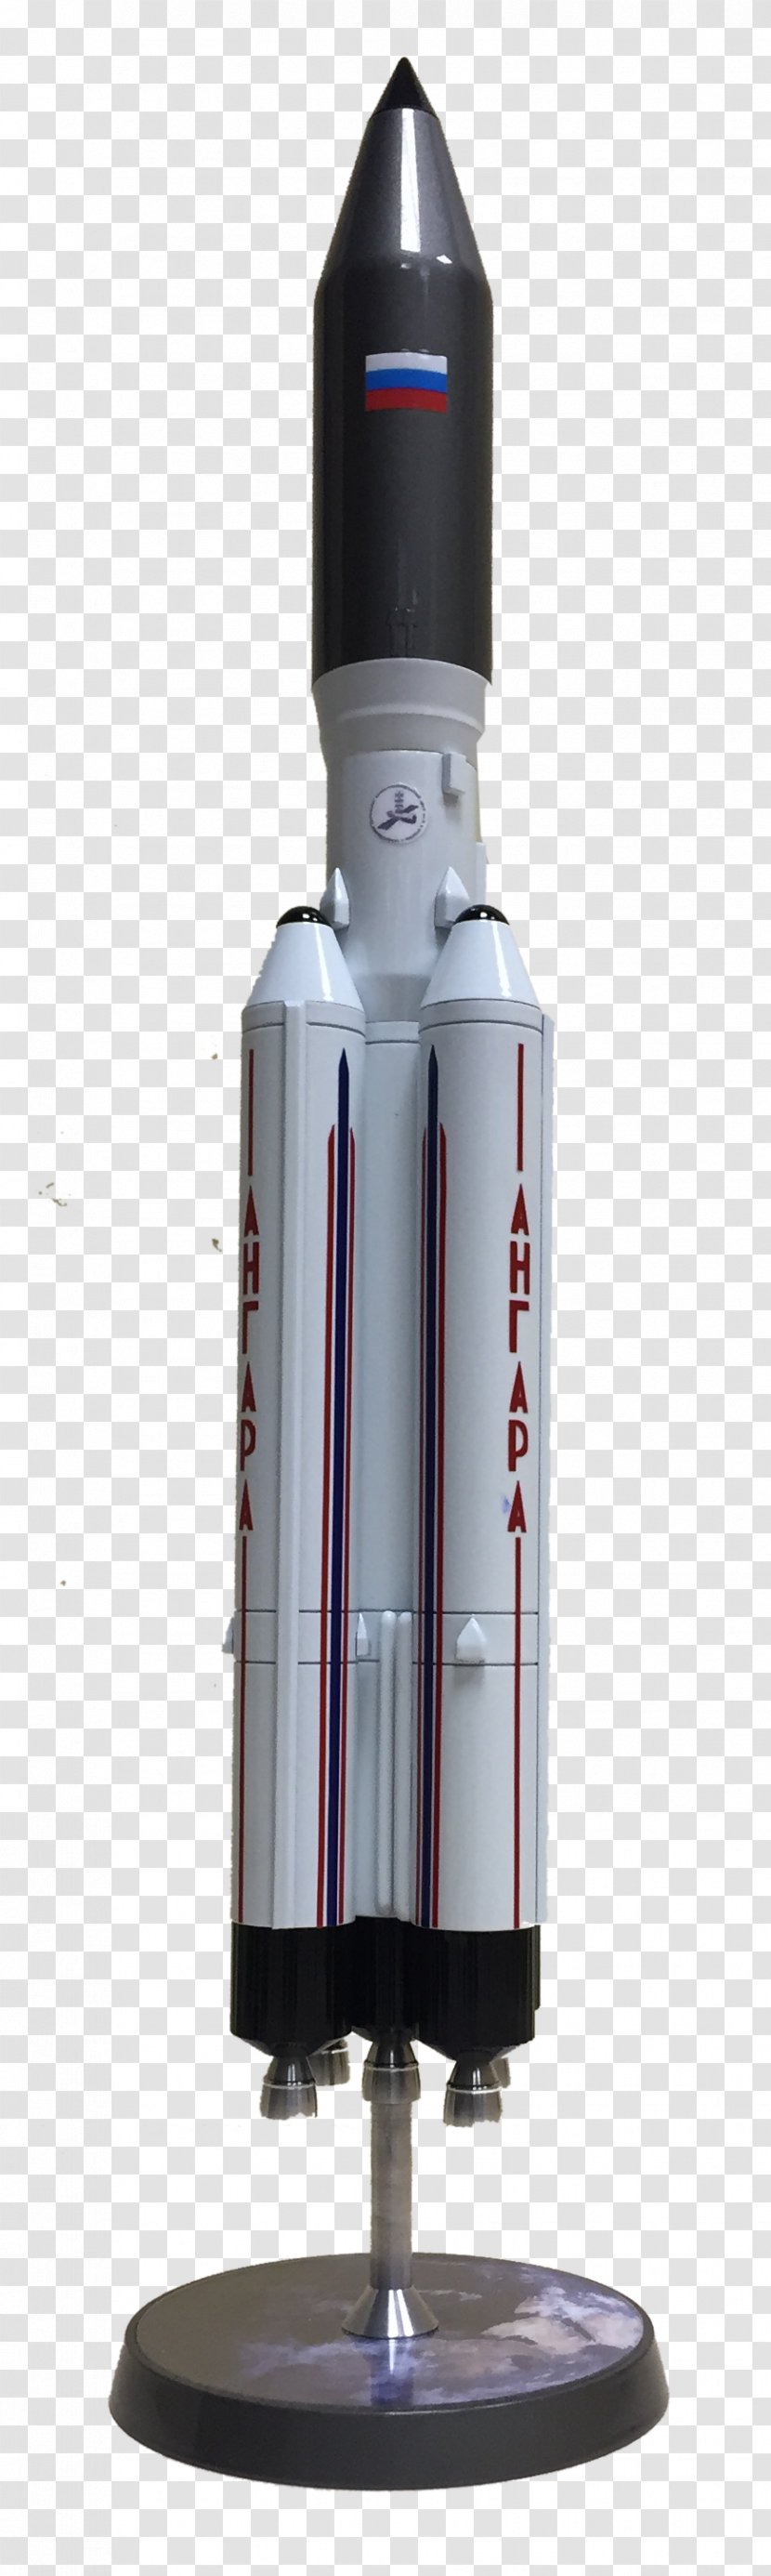 Rocket - Rockets Transparent PNG